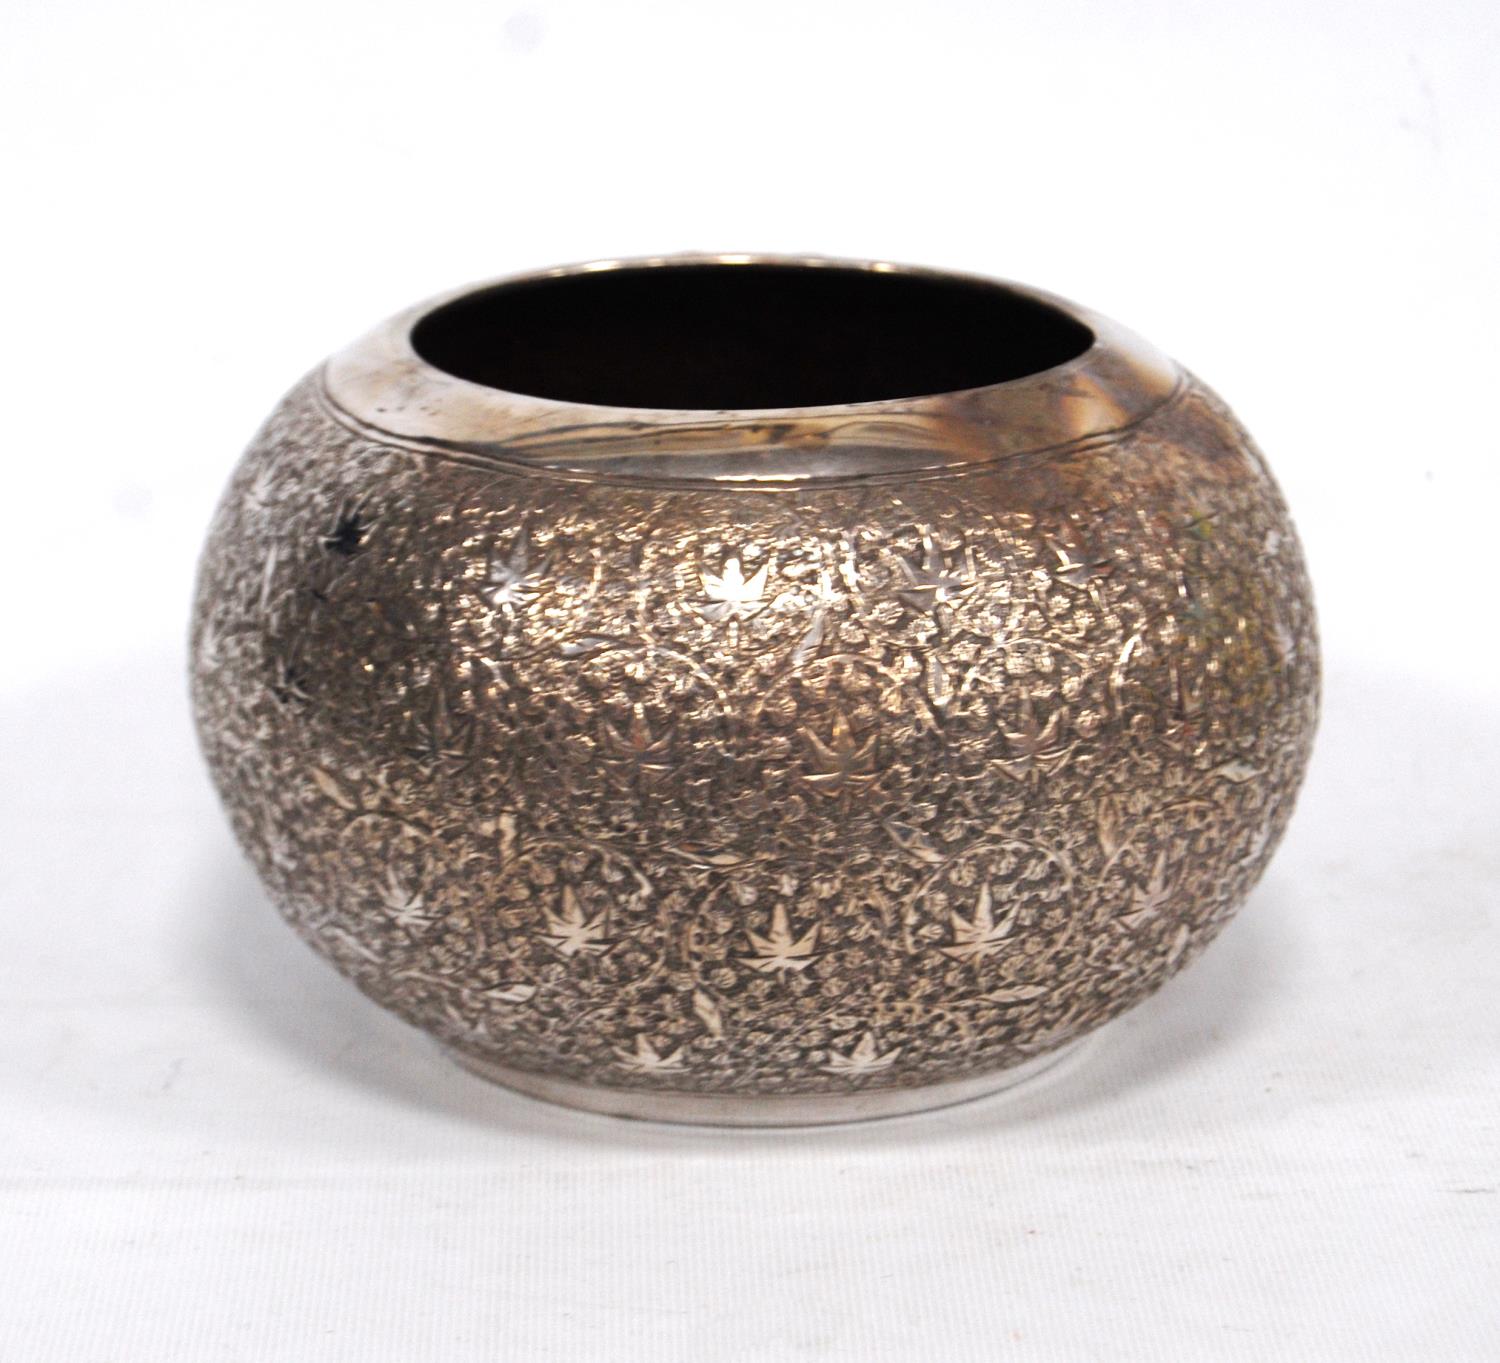 Indian silver embossed bowl of almost globular shape.